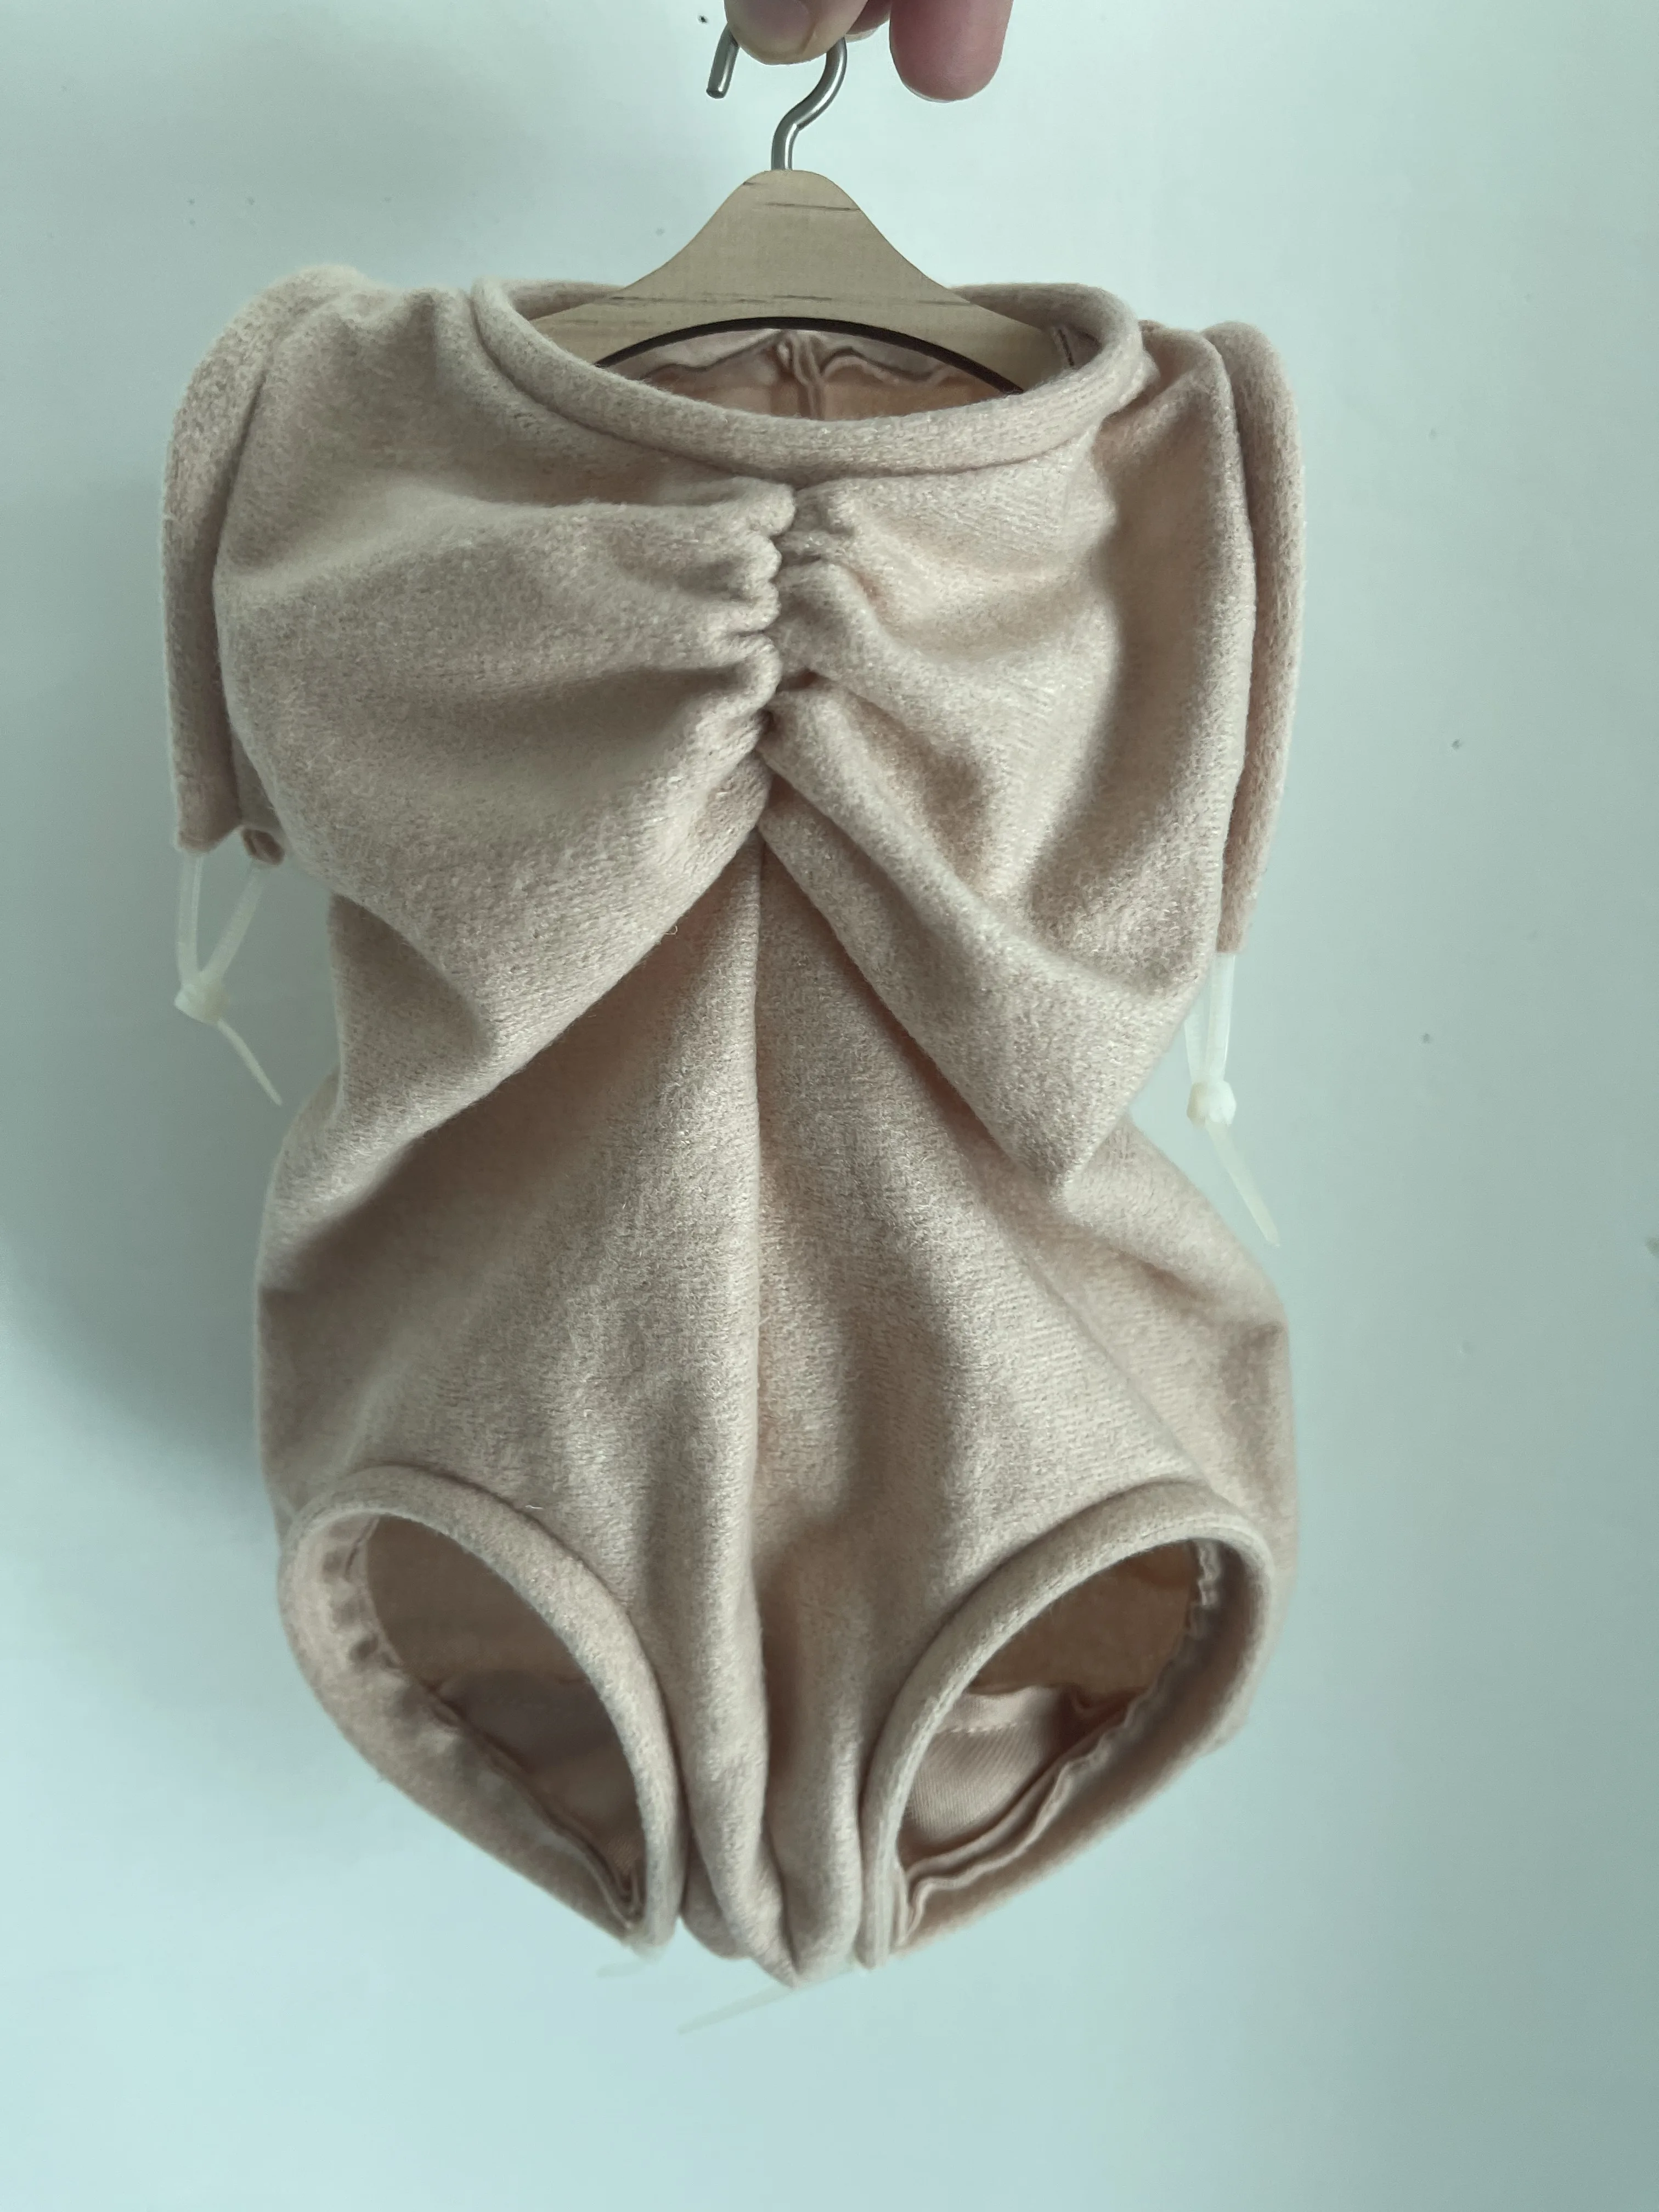 Miaio DIY Kit Doll Cloth Body Reborn Baby Parts Toy 17 Inches 20 Inches 24 Inches - Reborn Doll World